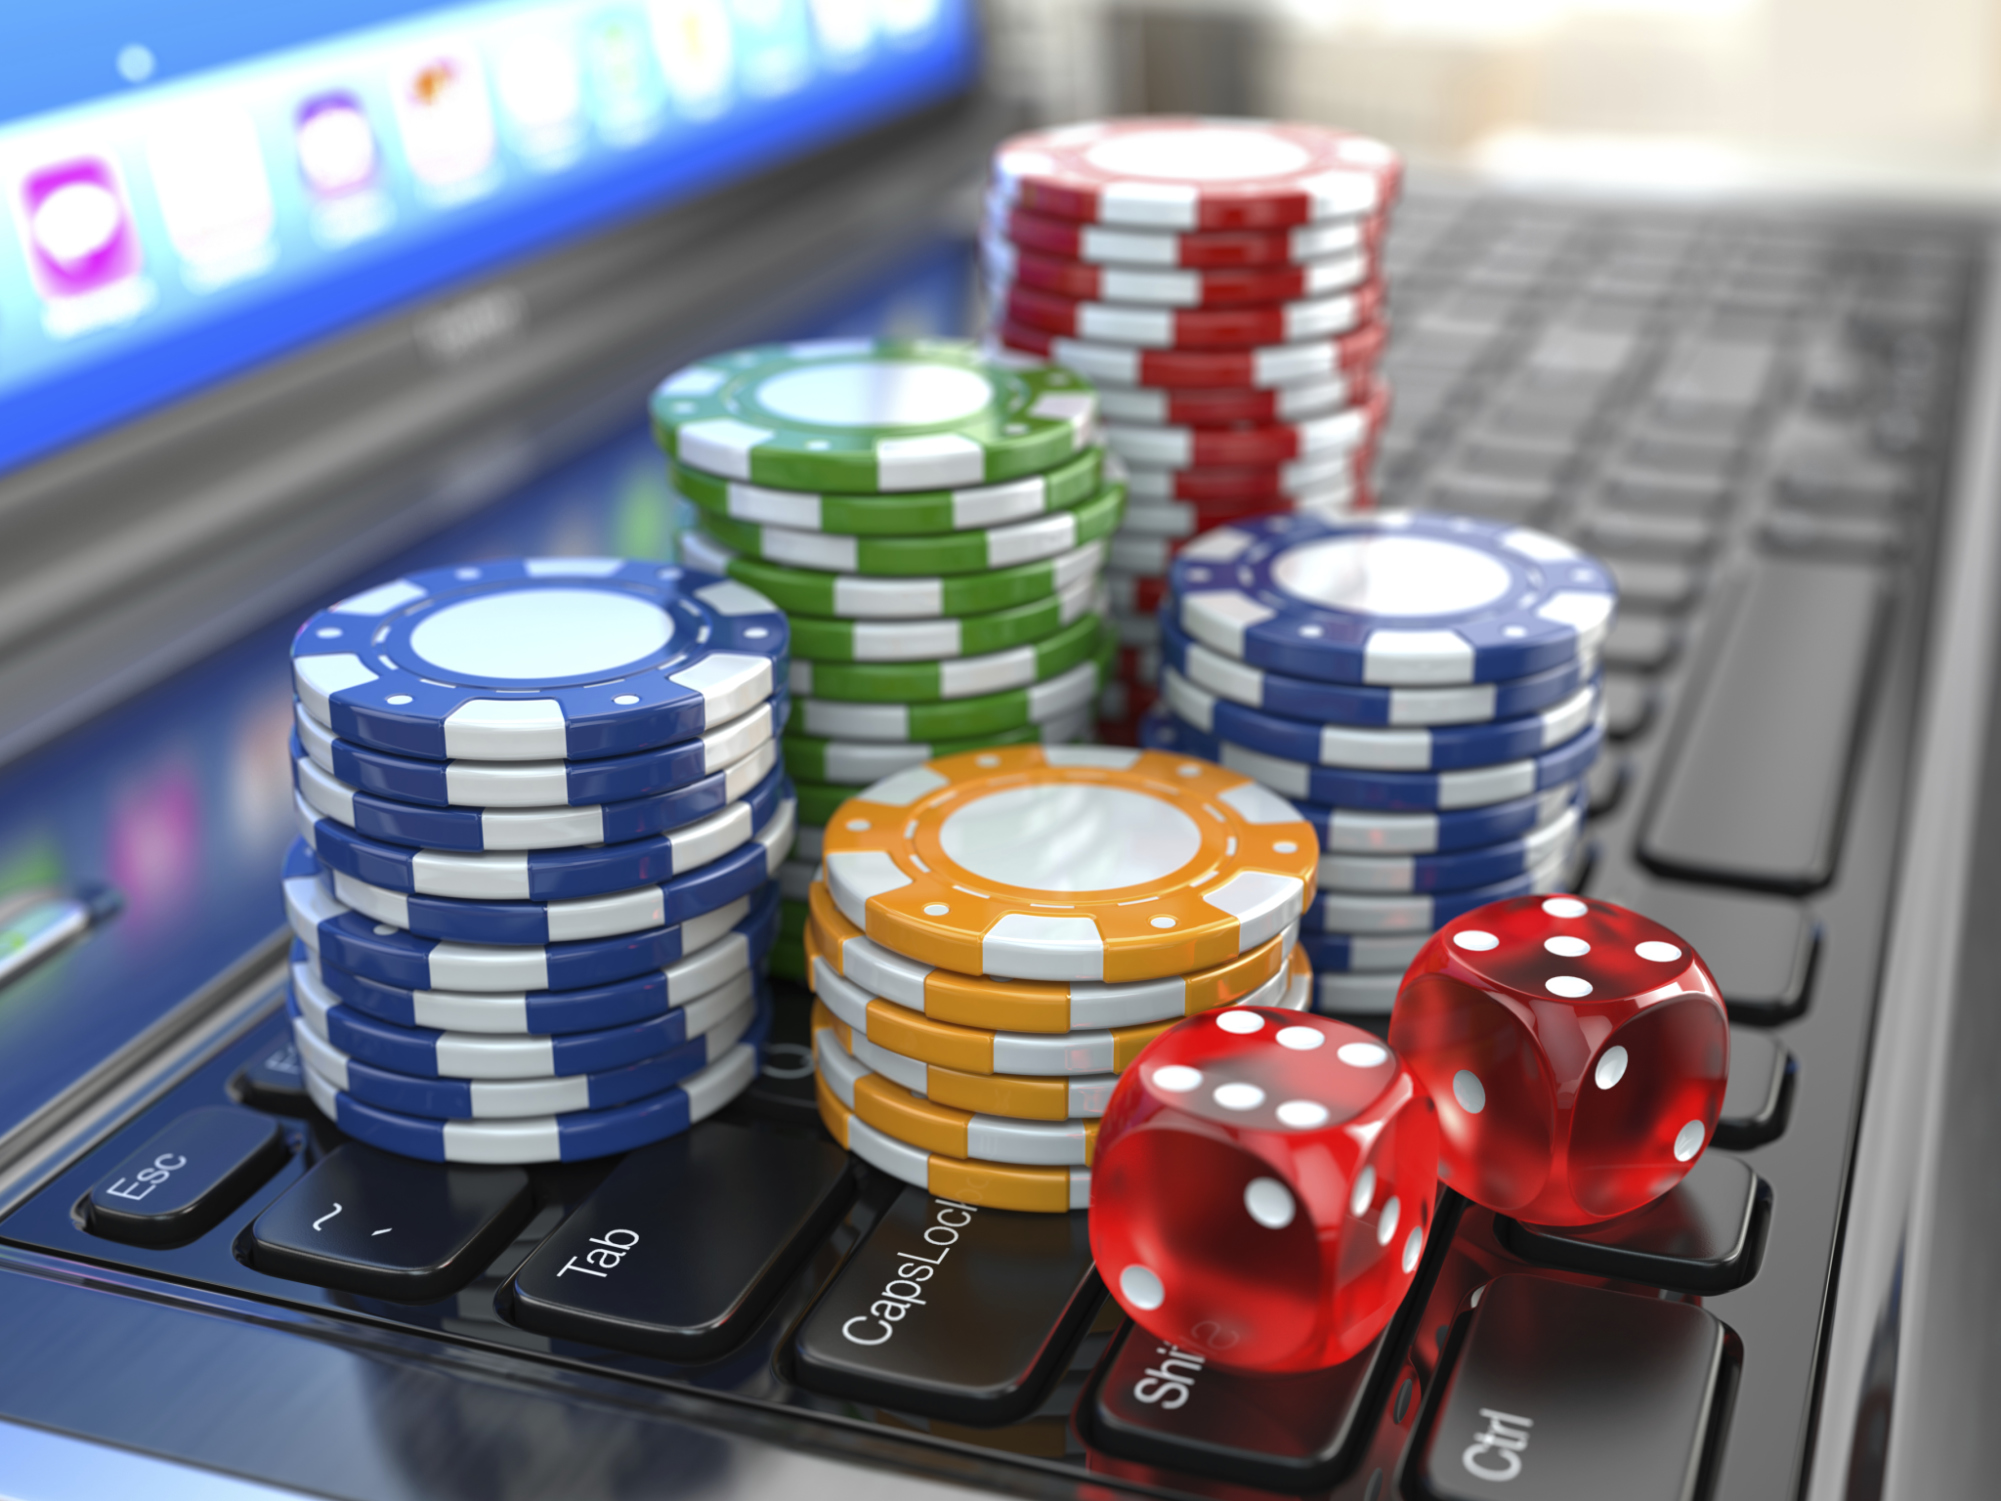 Should Fixing Casino Take 6 Steps?